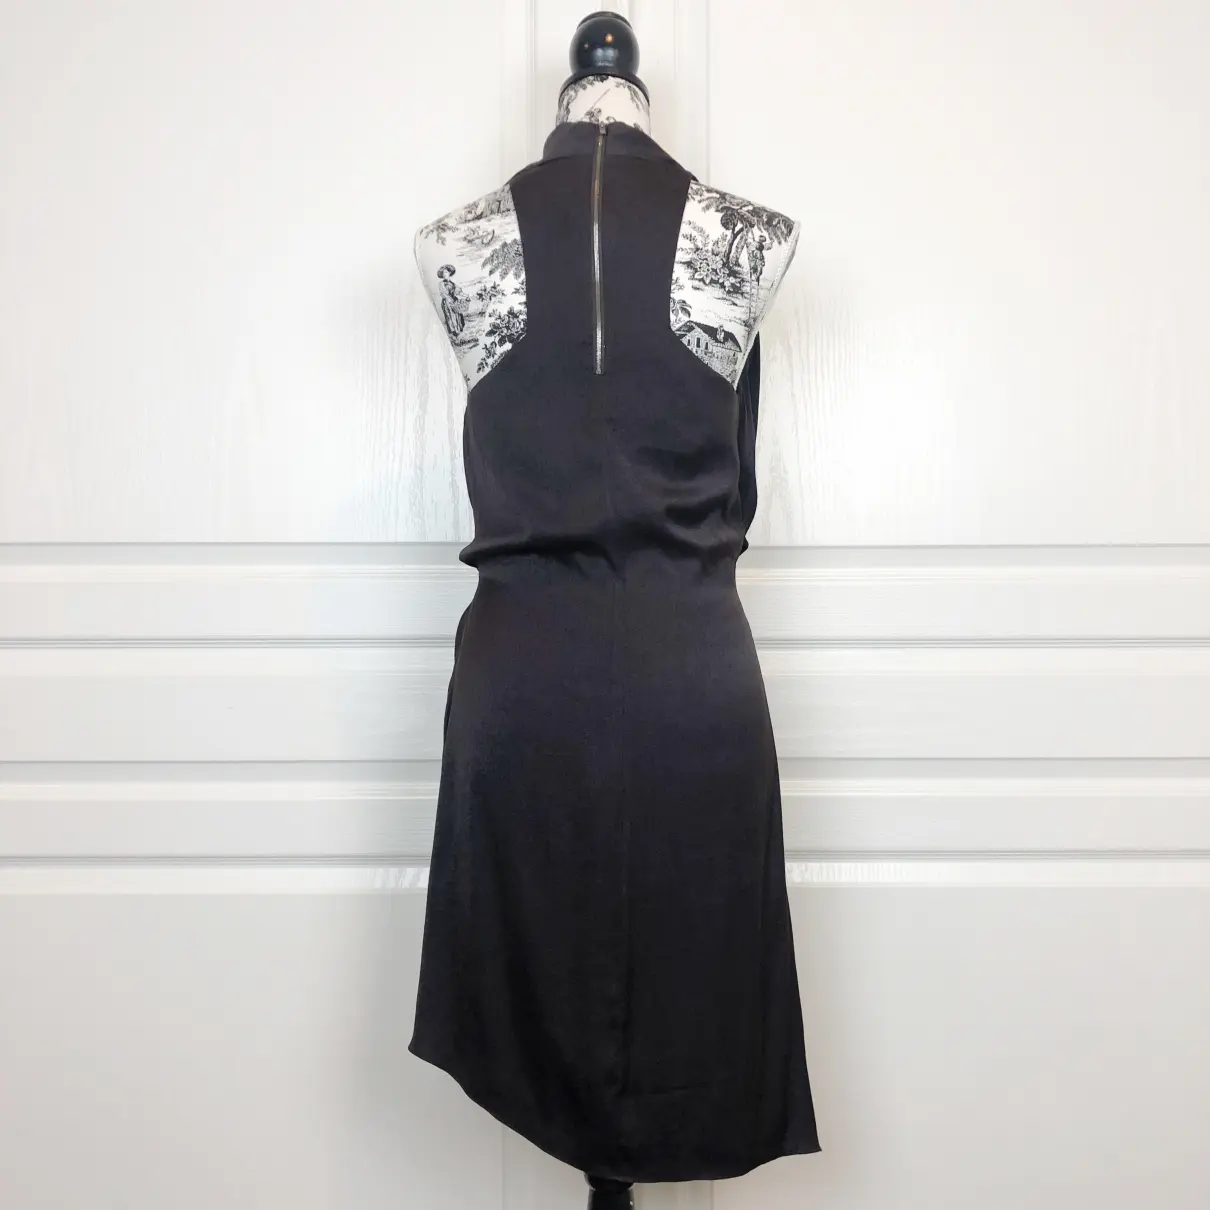 Buy Helmut Lang Mid-length dress online